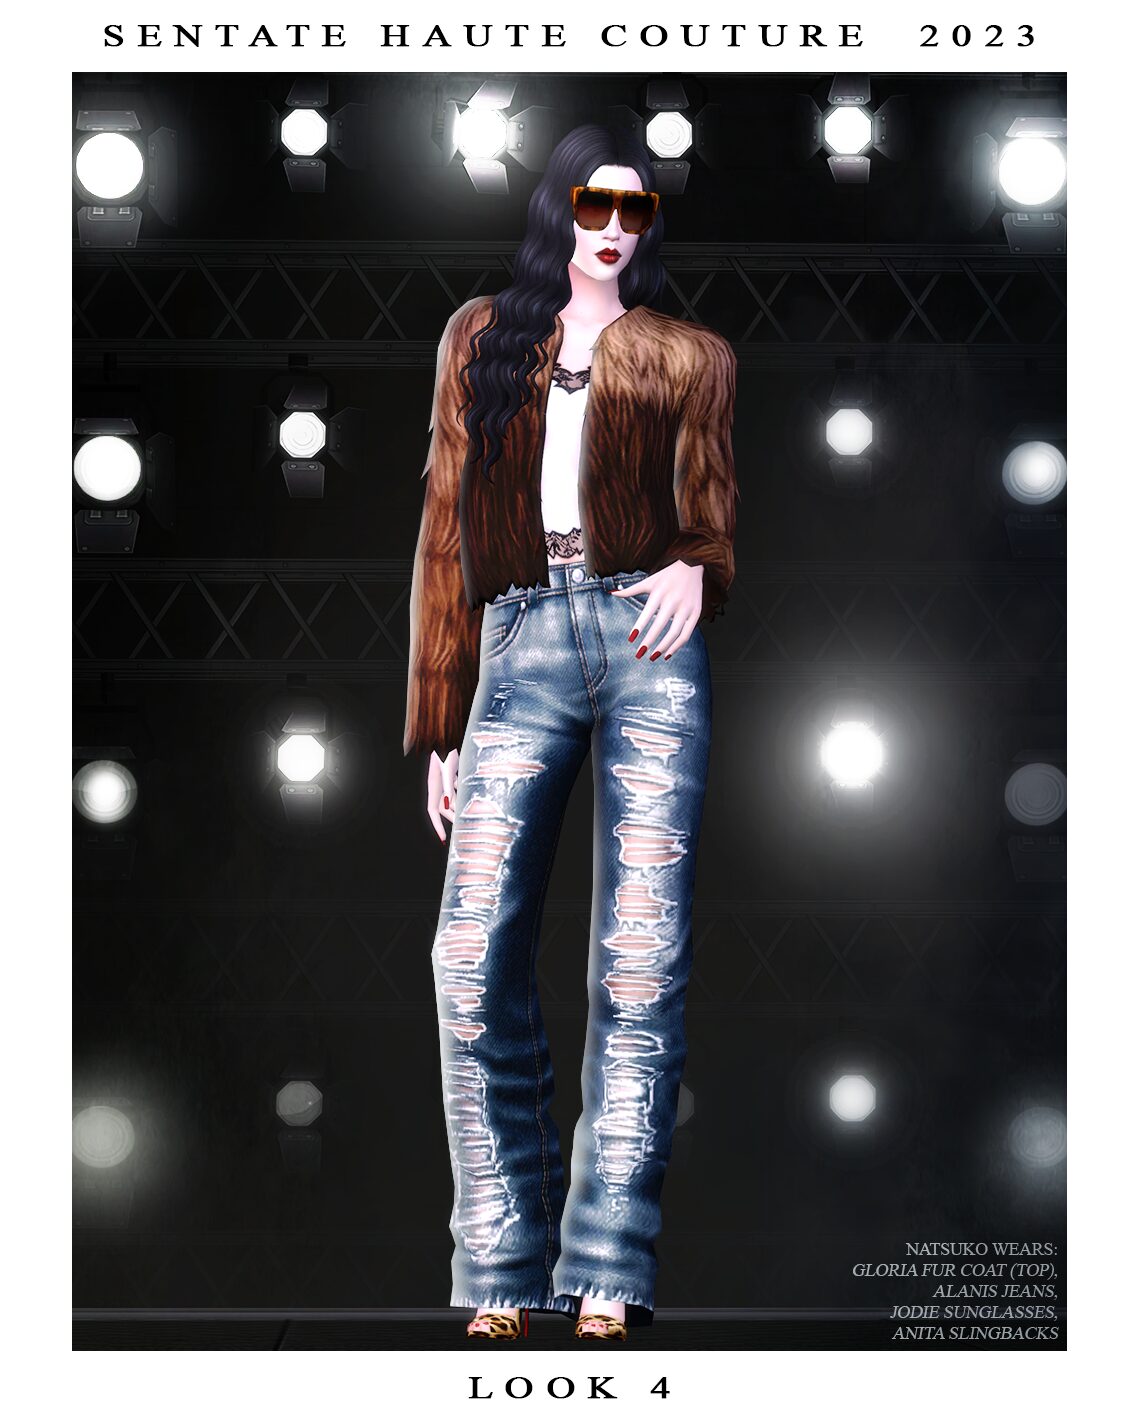 Gloria Fur Coat Top - Collection Haute Couture 2023